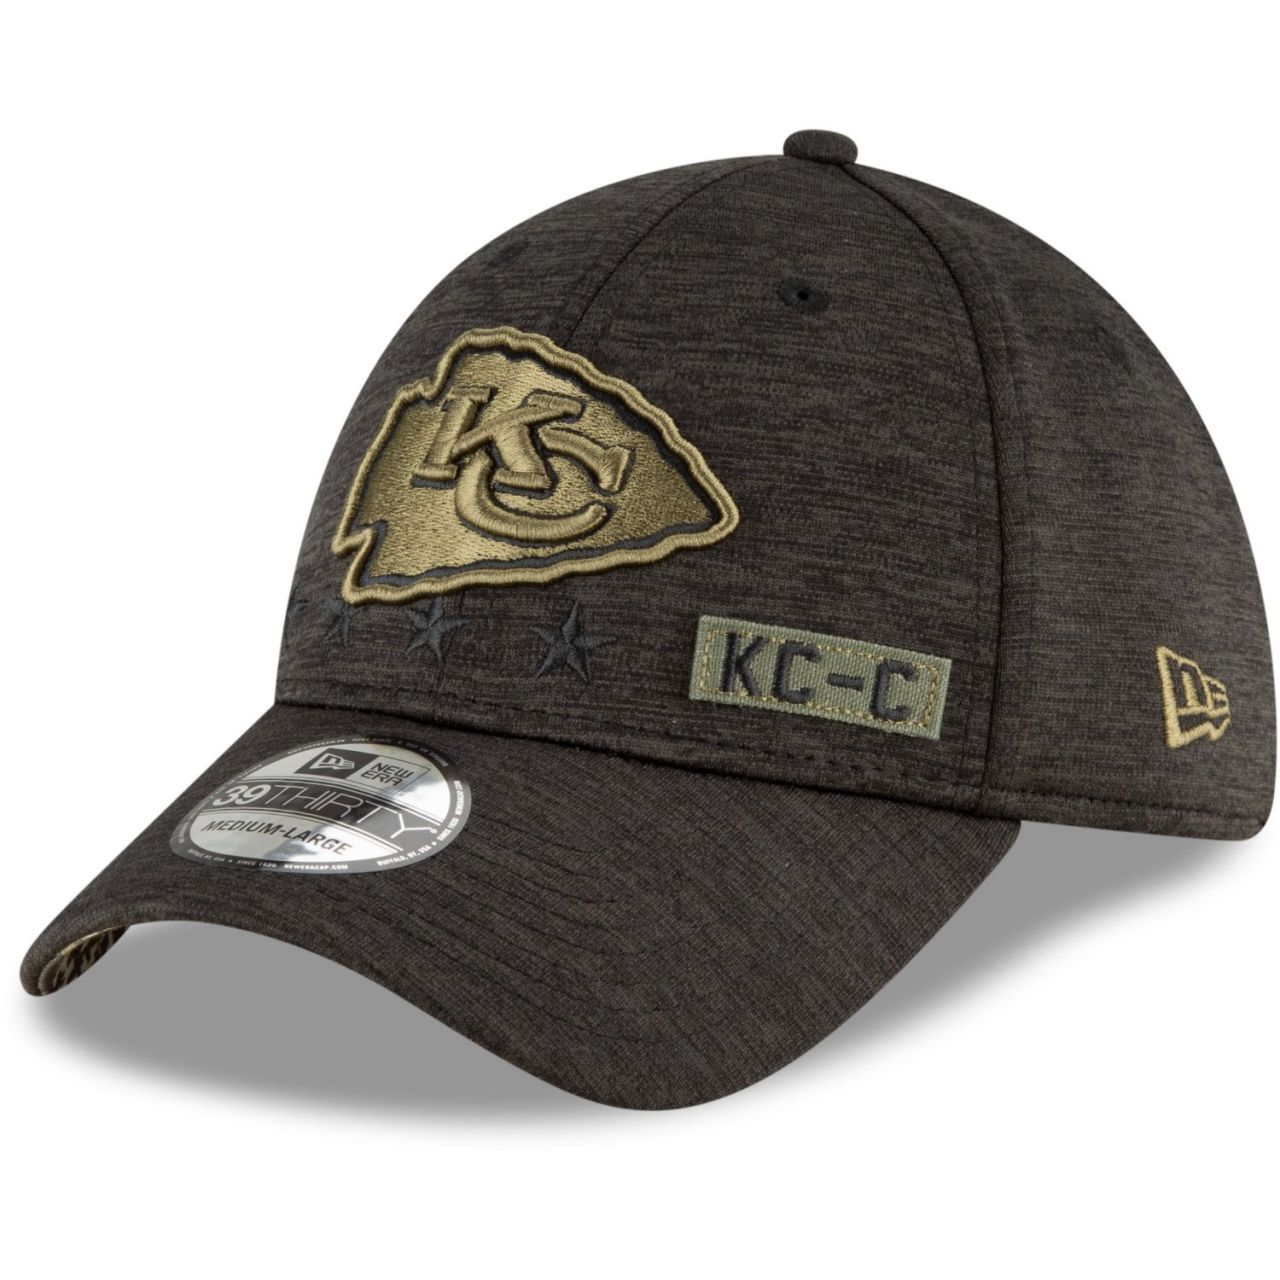 amfoo - New Era 39Thirty Cap Salute to Service Kansas City Chiefs